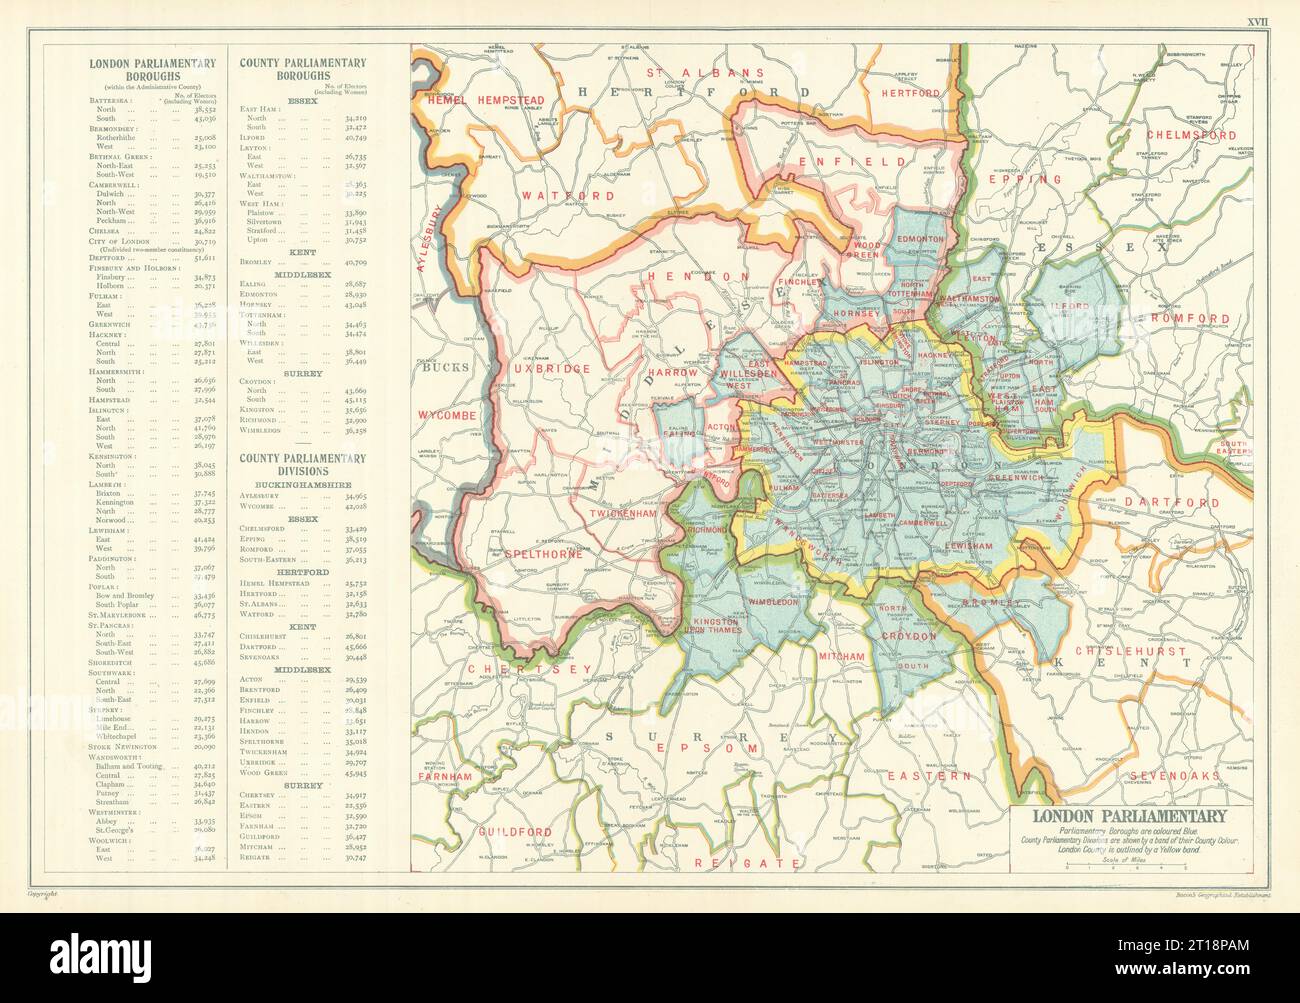 GREATER LONDON PARLIAMENTARY. Constituencies Boroughs # electors. BACON 1919 map Stock Photo